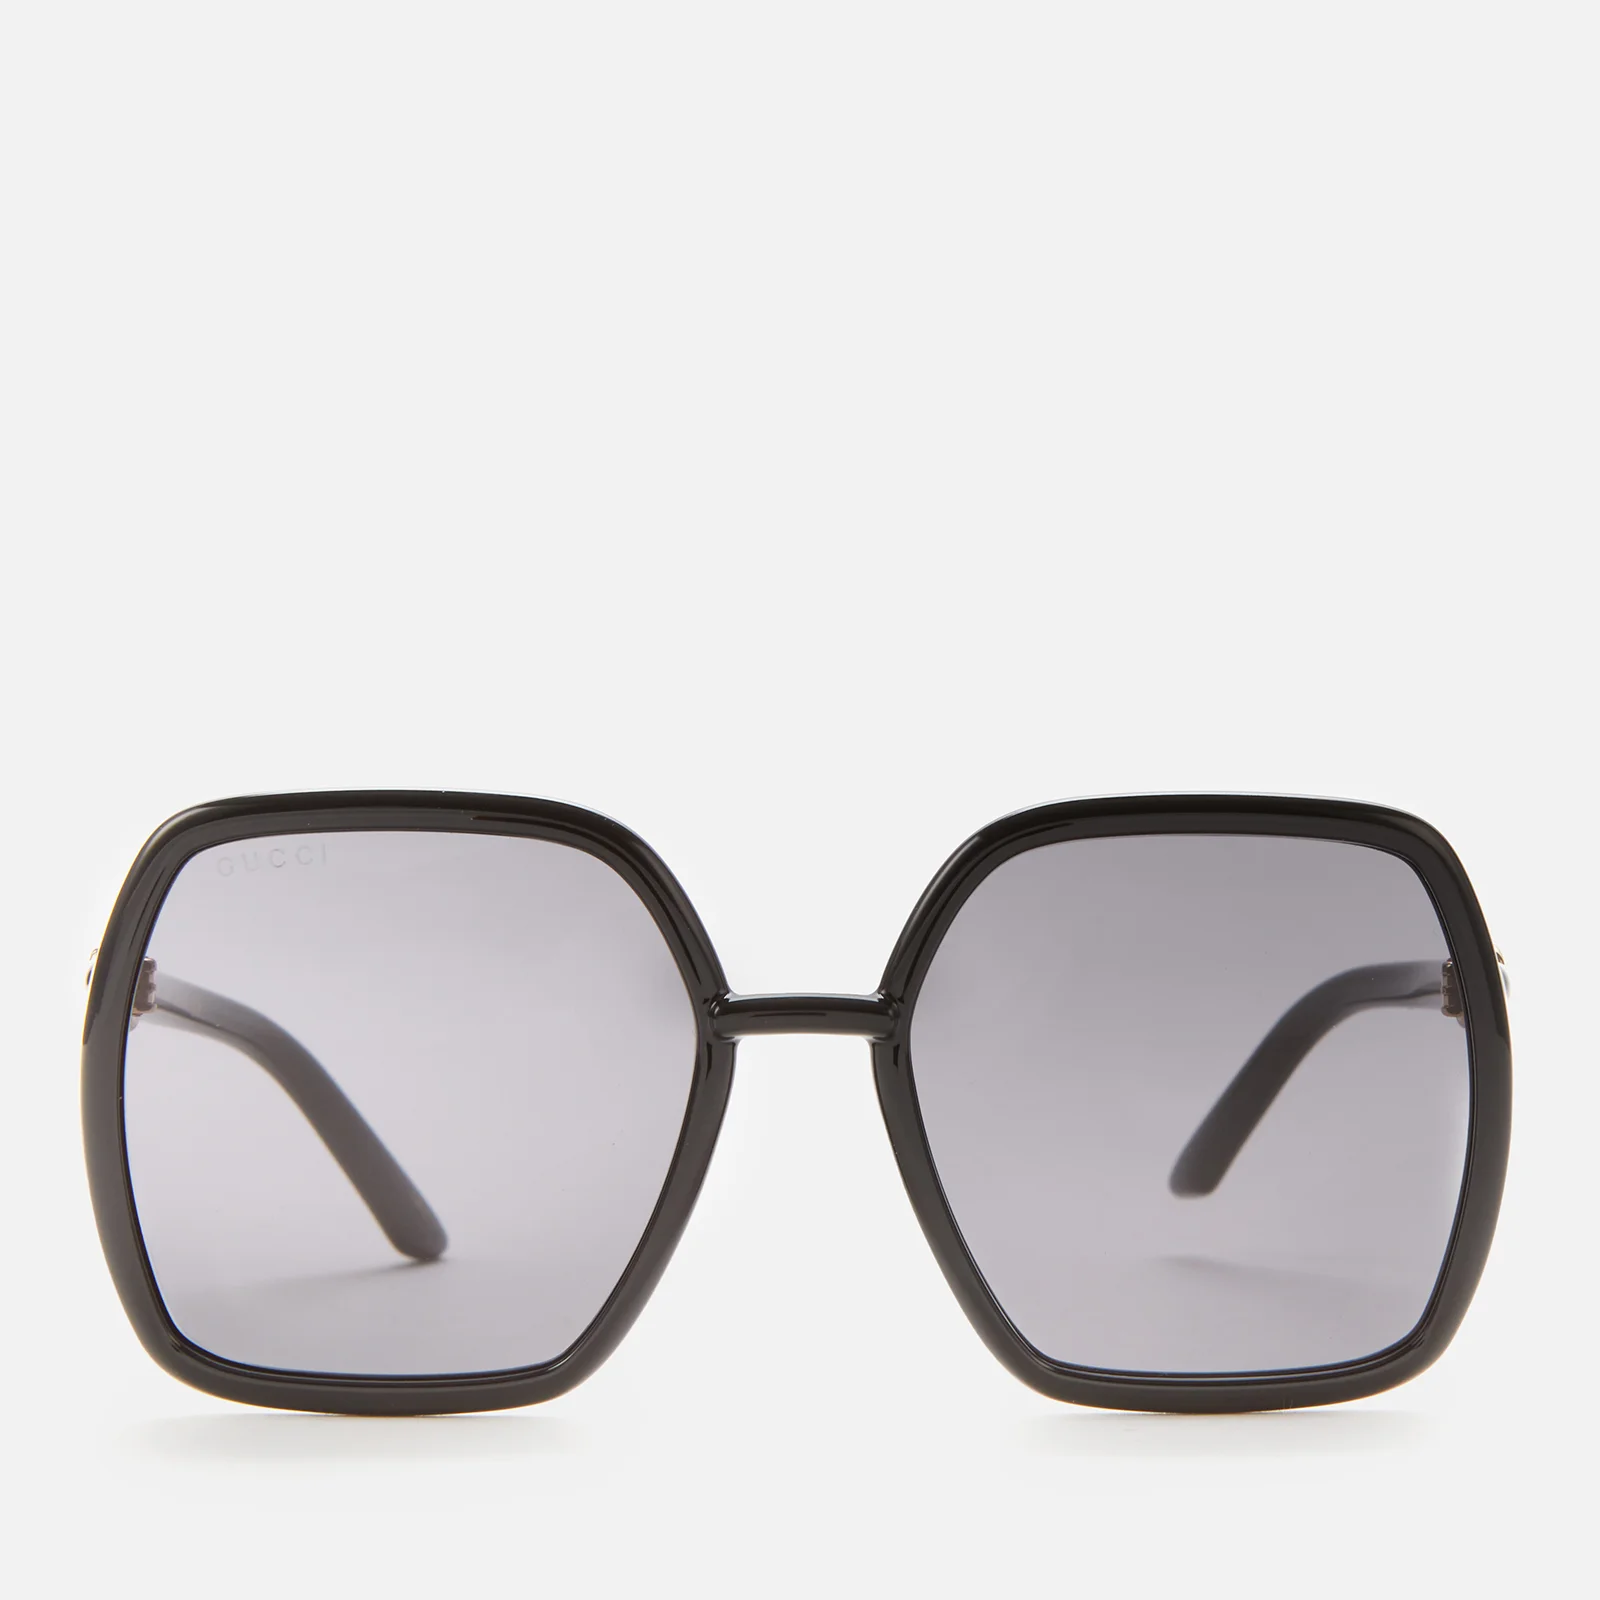 Gucci Women's Horsebit Combi Frame Sunglasses - Black/Black/Grey Image 1